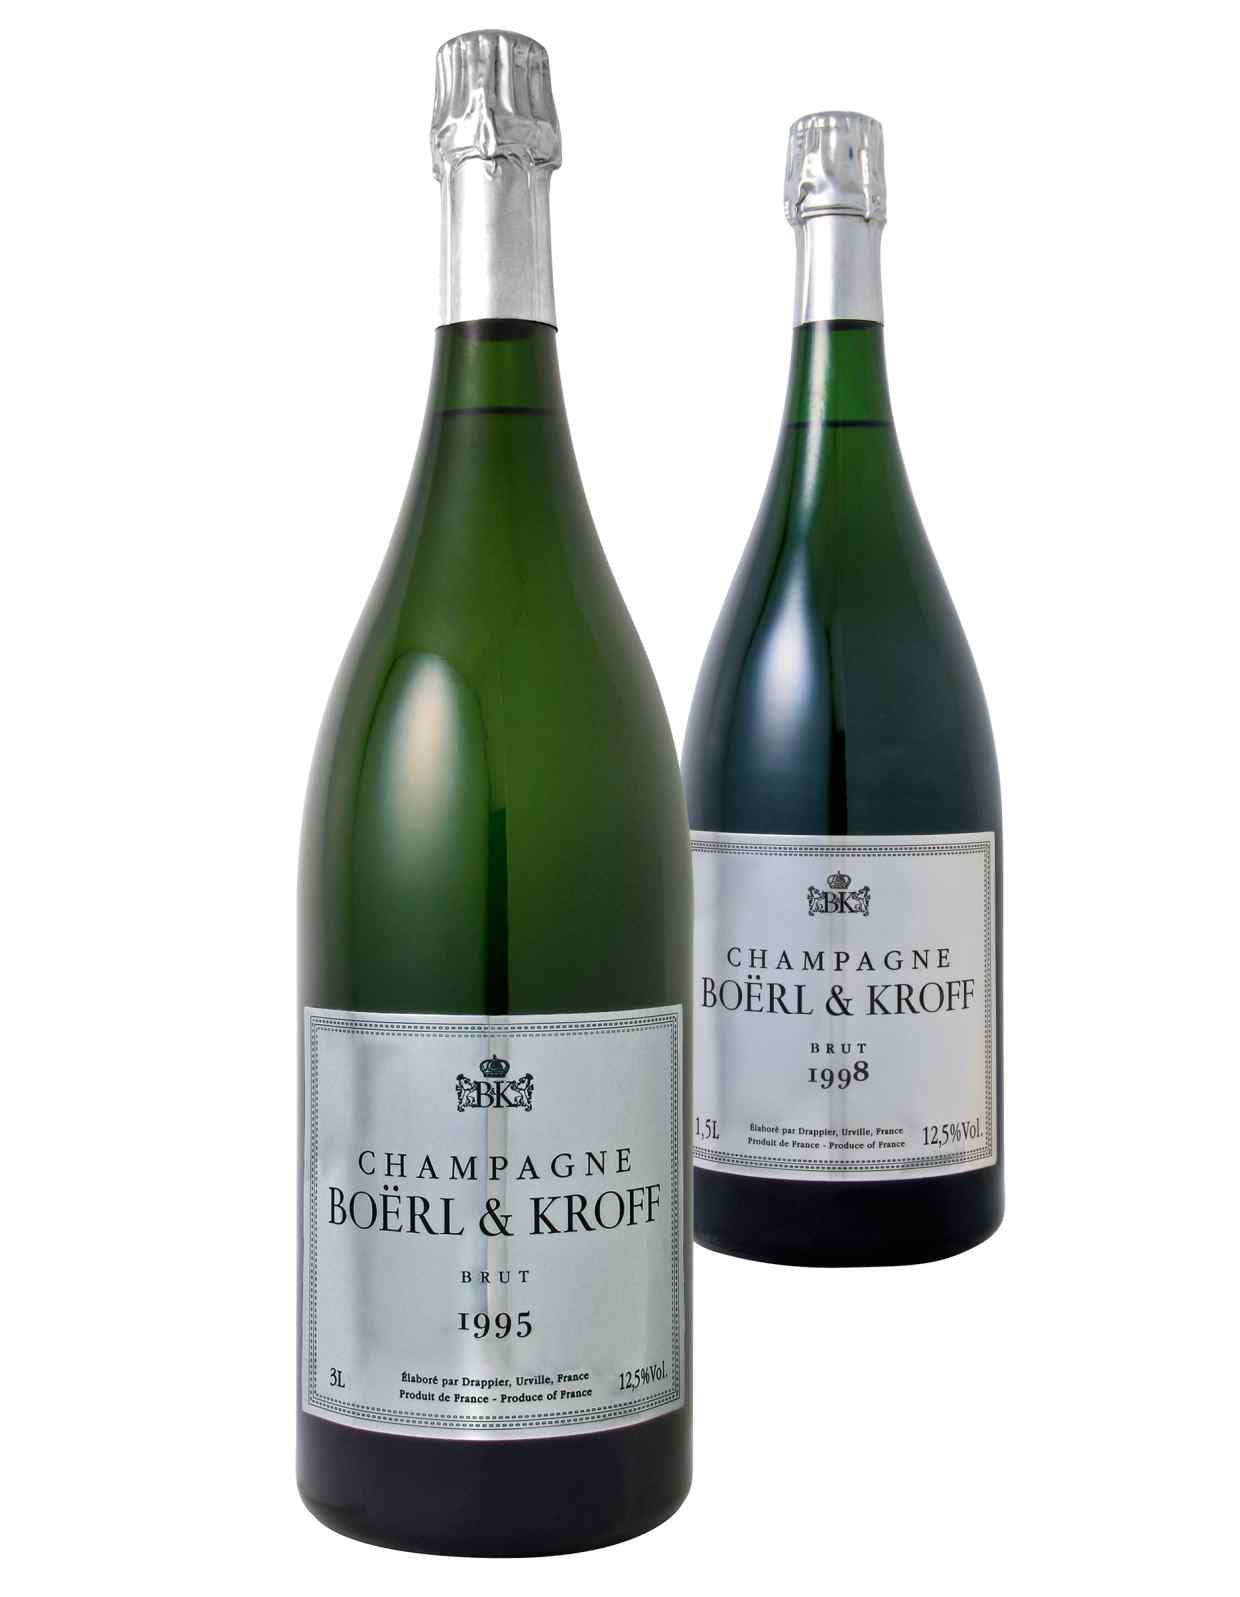 Boërl & Kroff Brut champagne cuvée michel drappier